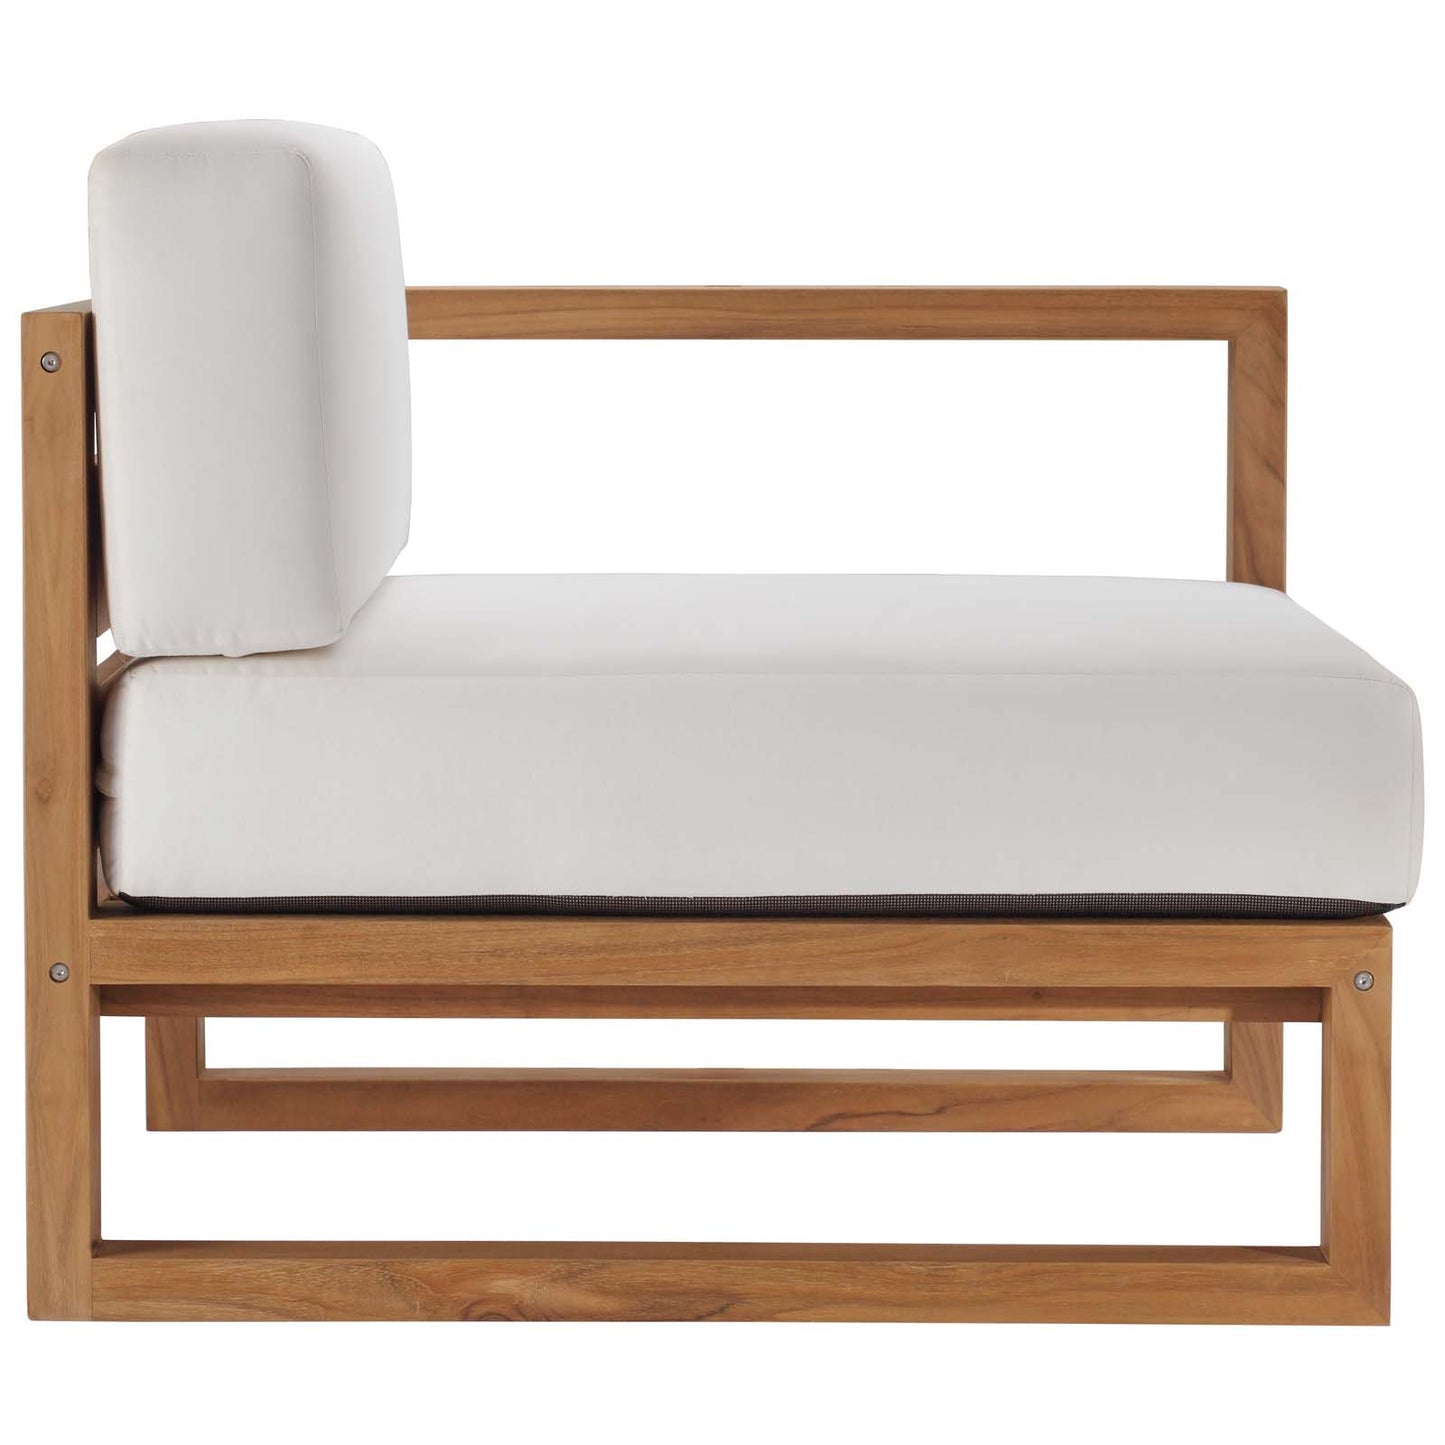 Upland Outdoor Patio Teak Wood 4-Piece Furniture Set Natural White EEI-4257-NAT-WHI-SET